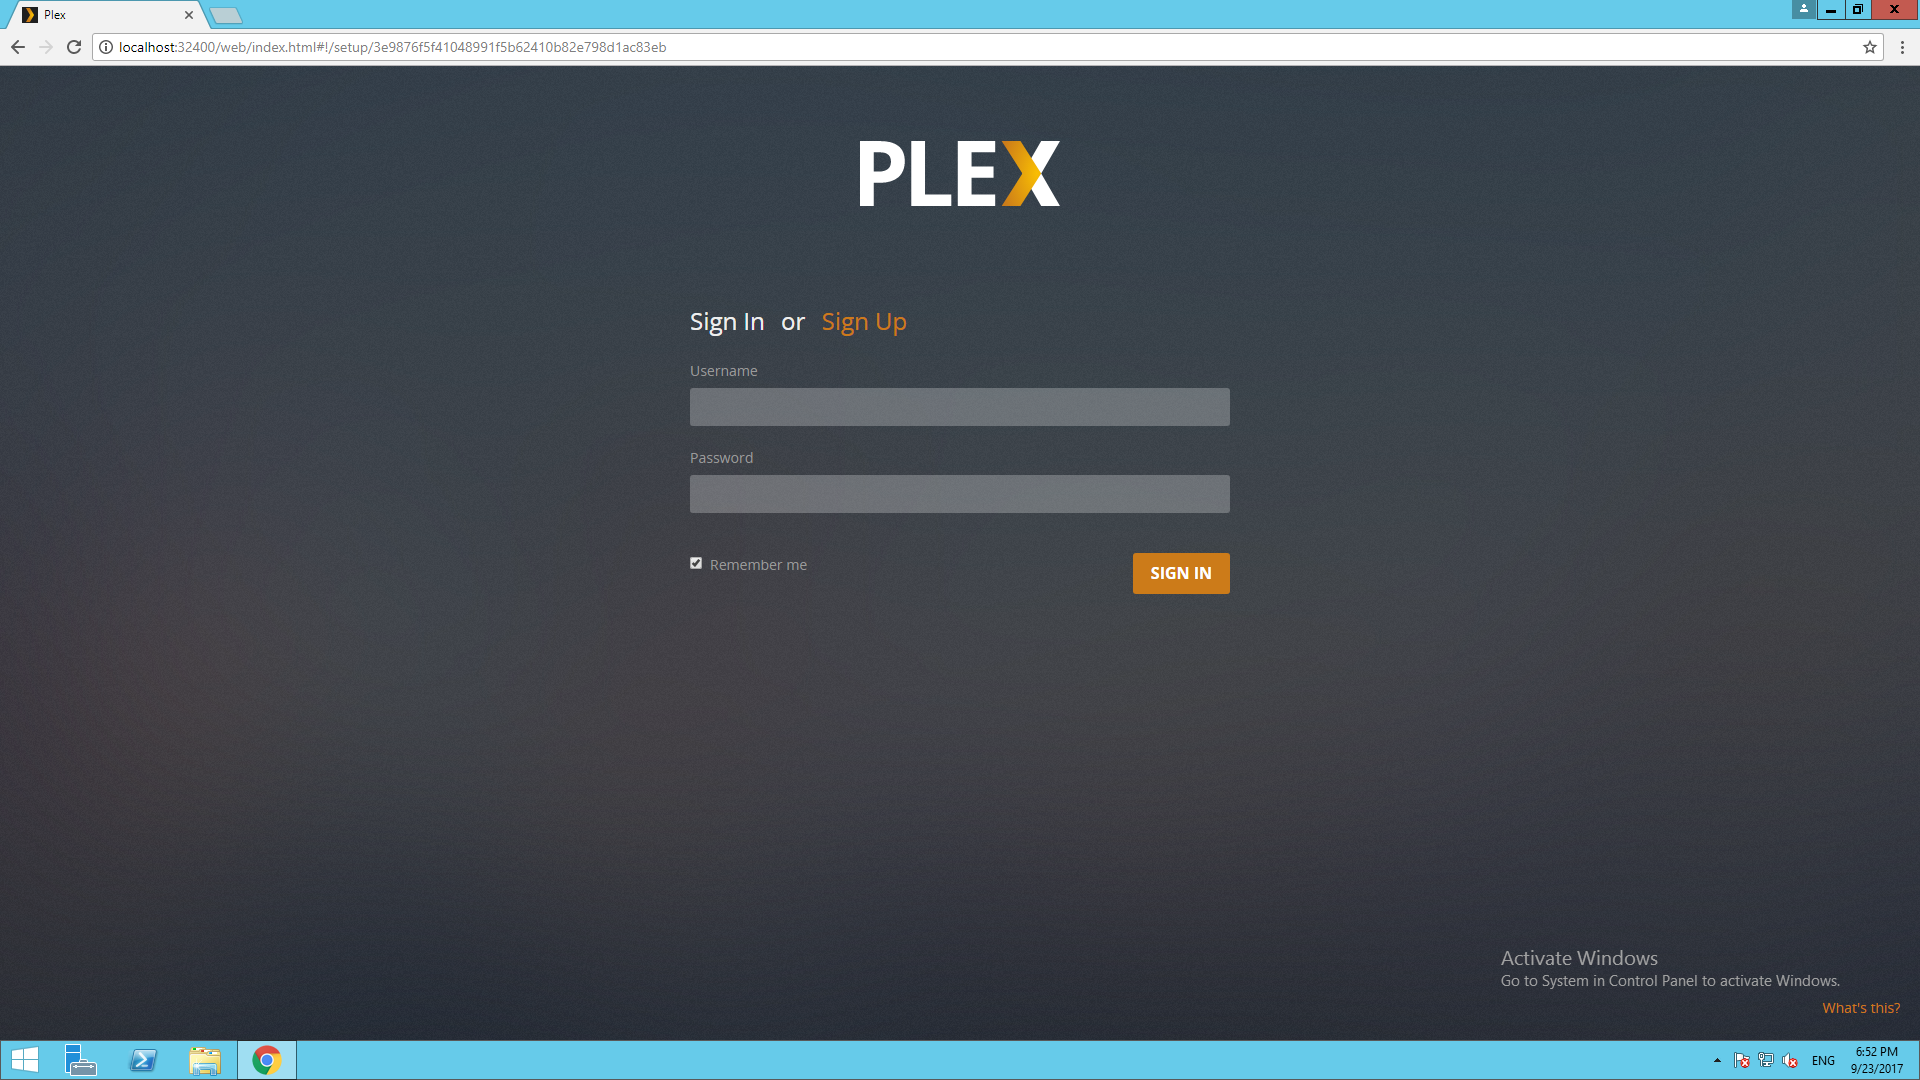 plex media server ubuntu does not open in browser